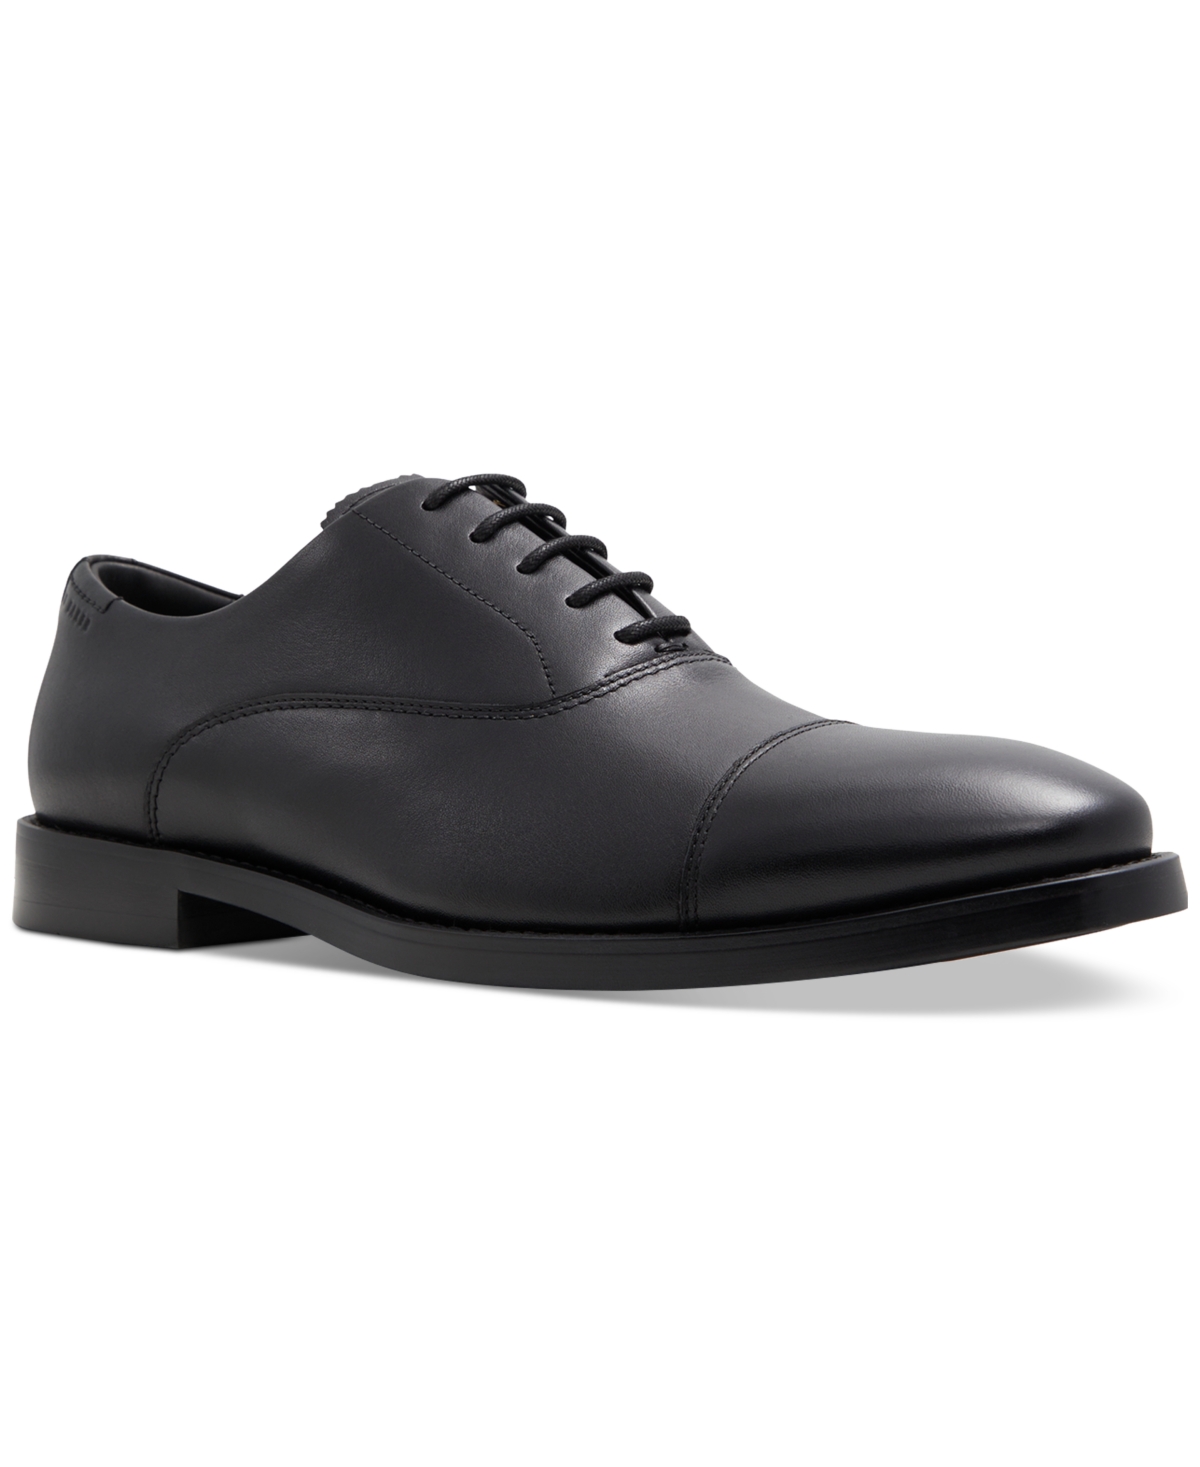 Men's Oxford Dress Shoes - Black